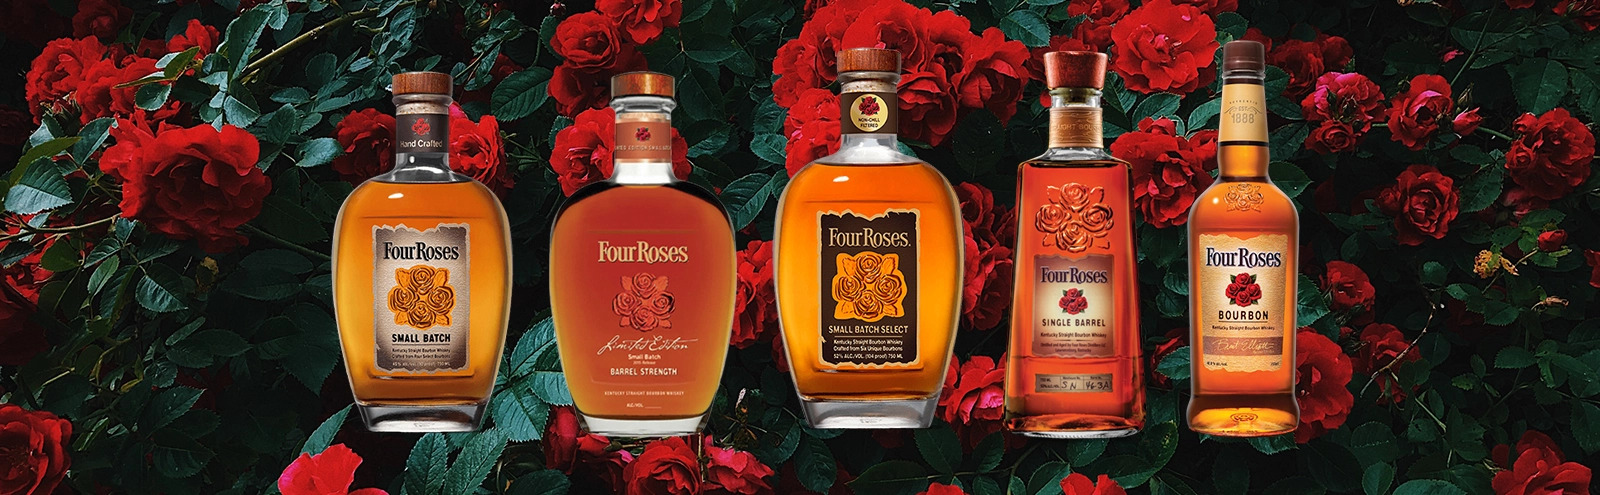 whisky four roses